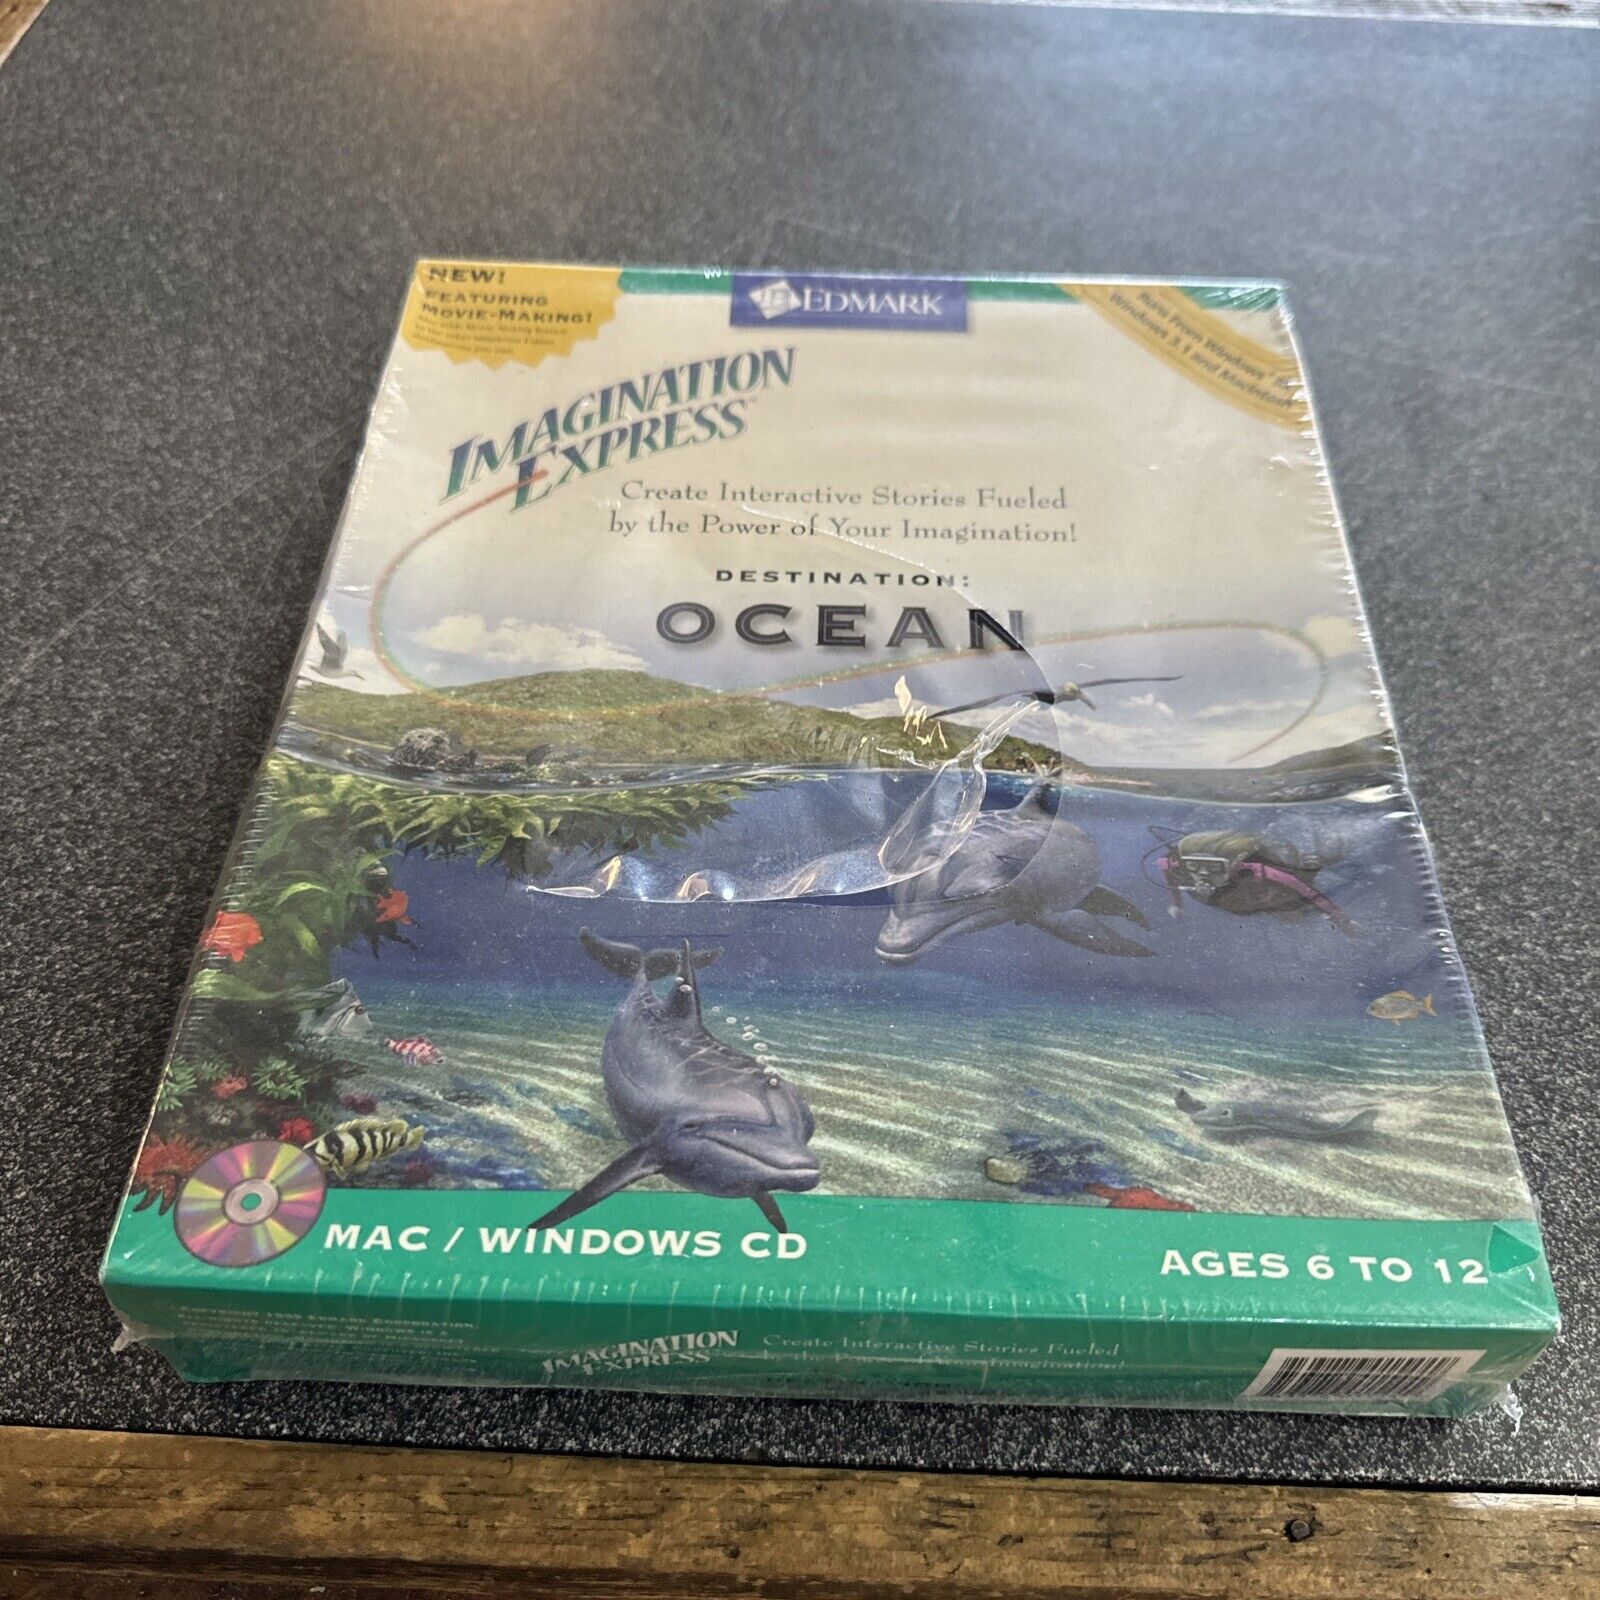 Imagination Express Destination: Ocean (CD, 1995, PC, EDMARK) Brand New Sealed